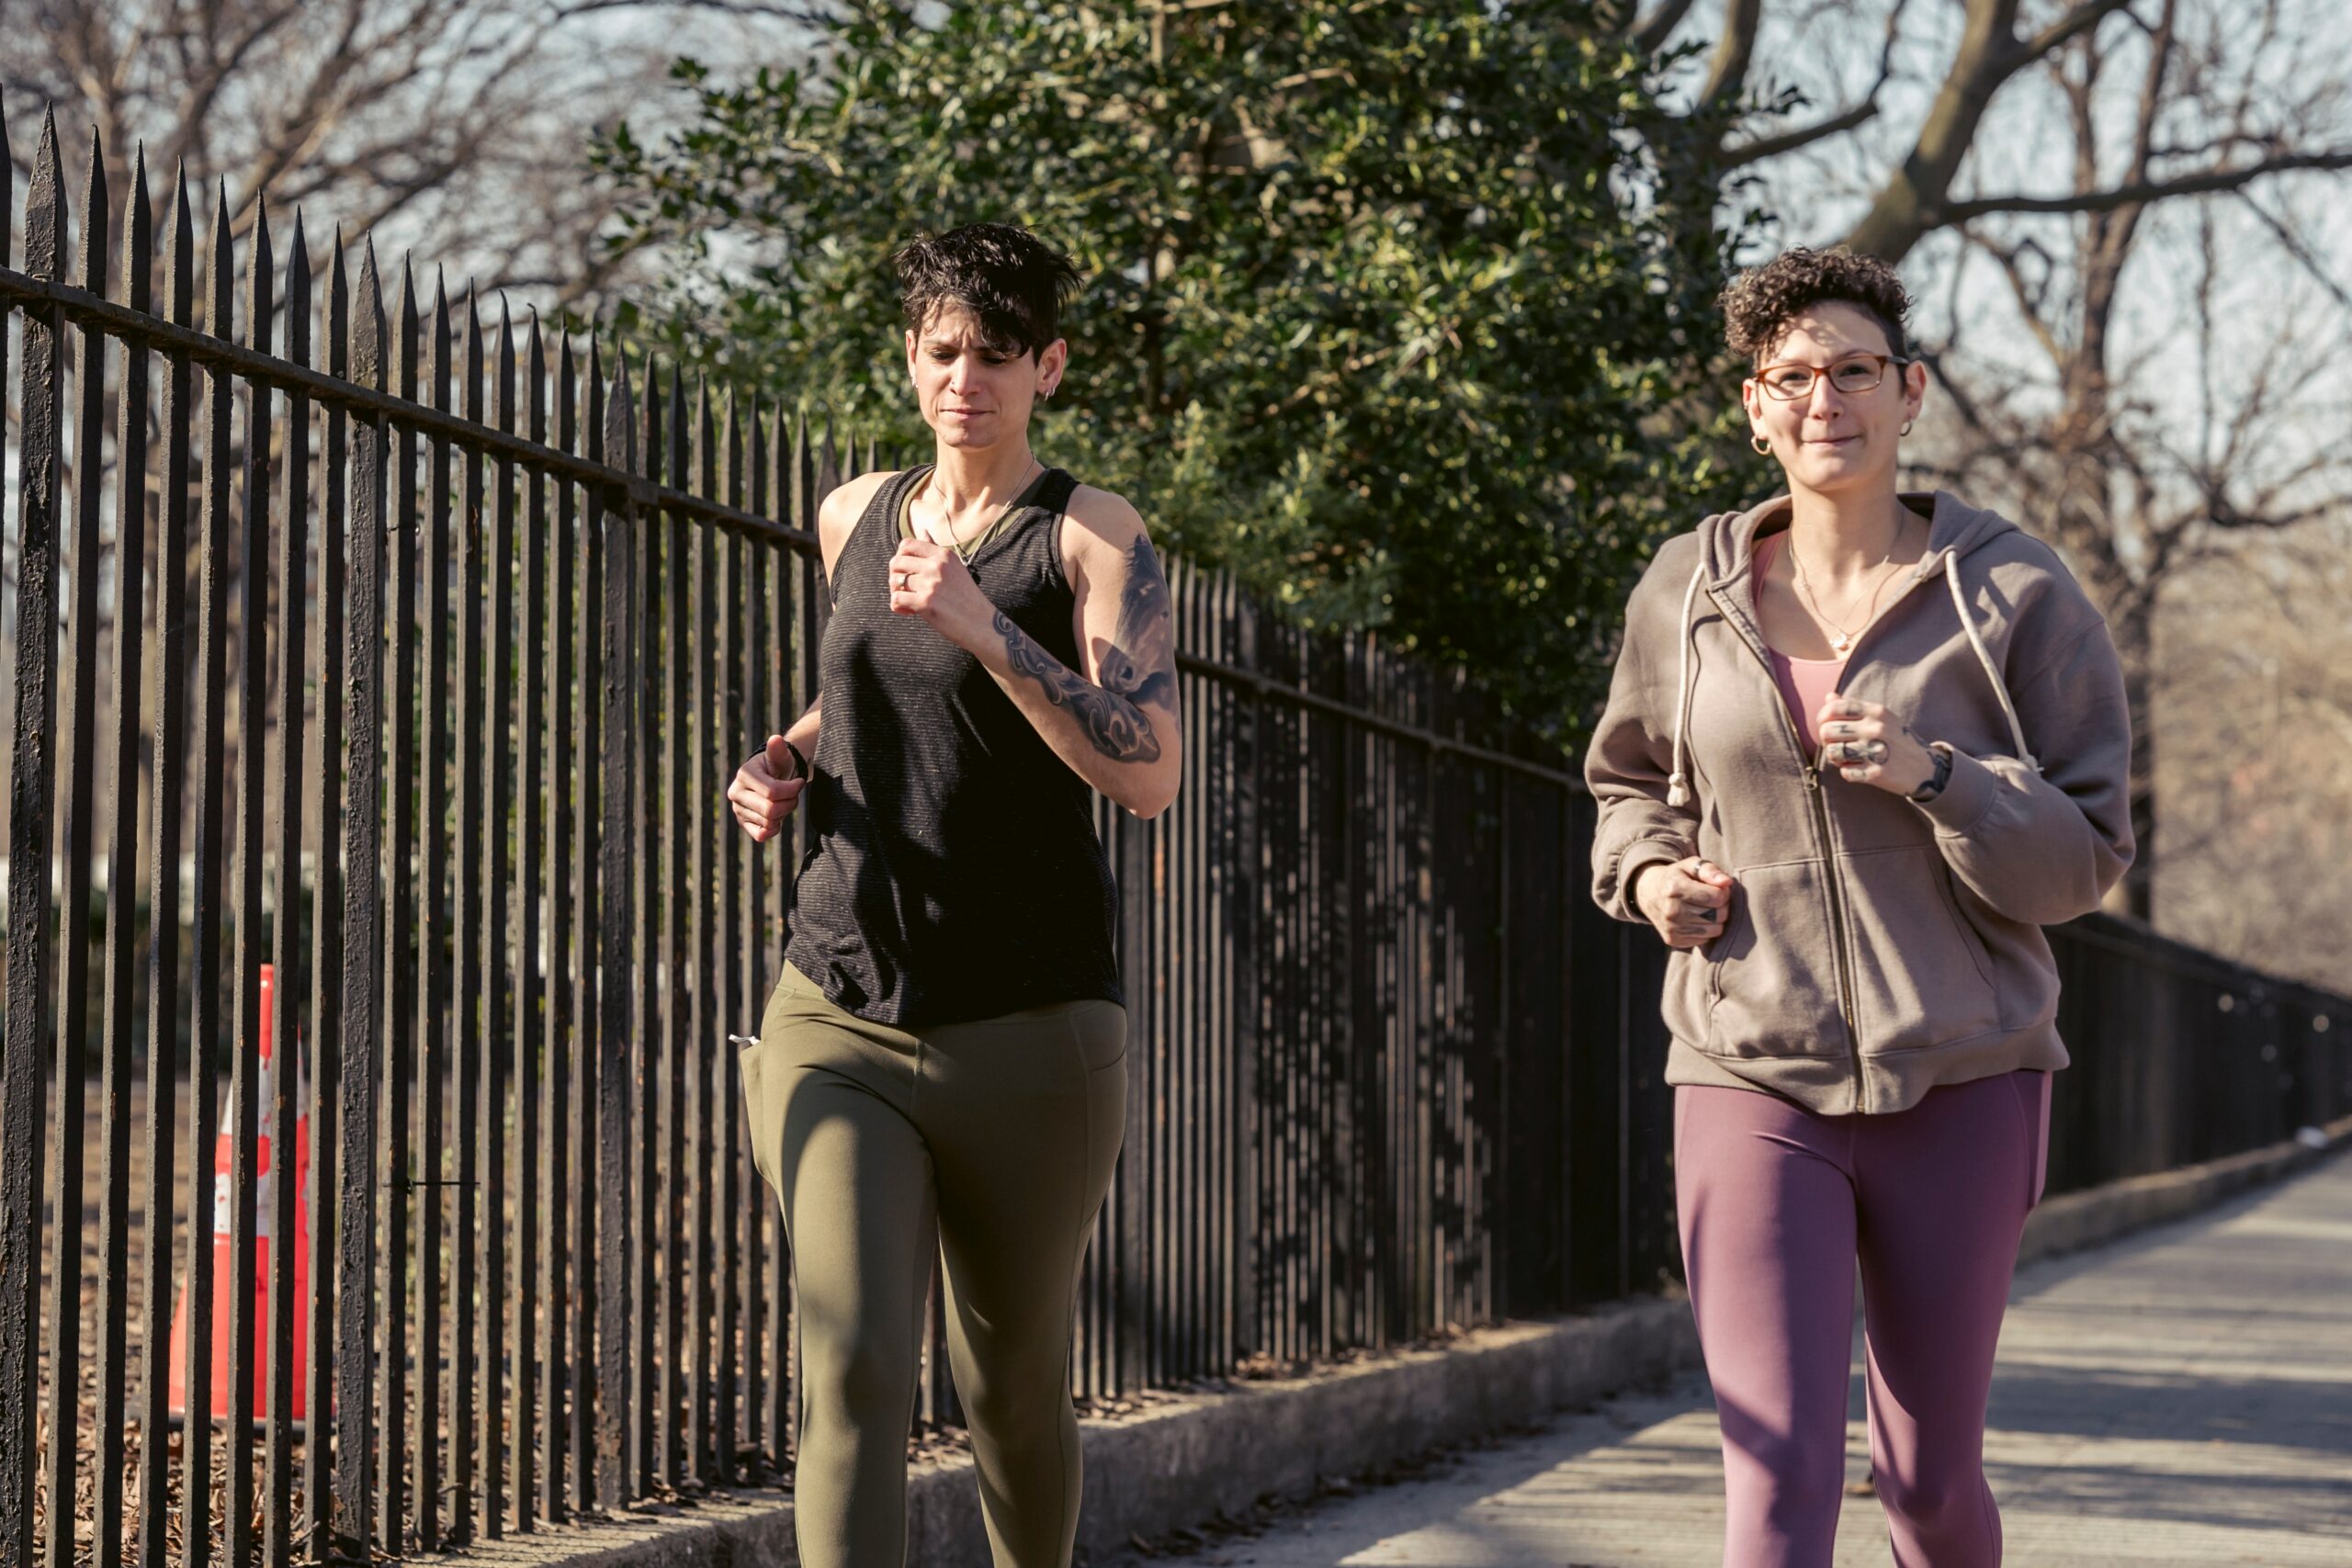 Two women jogging alongside a tall iron fence